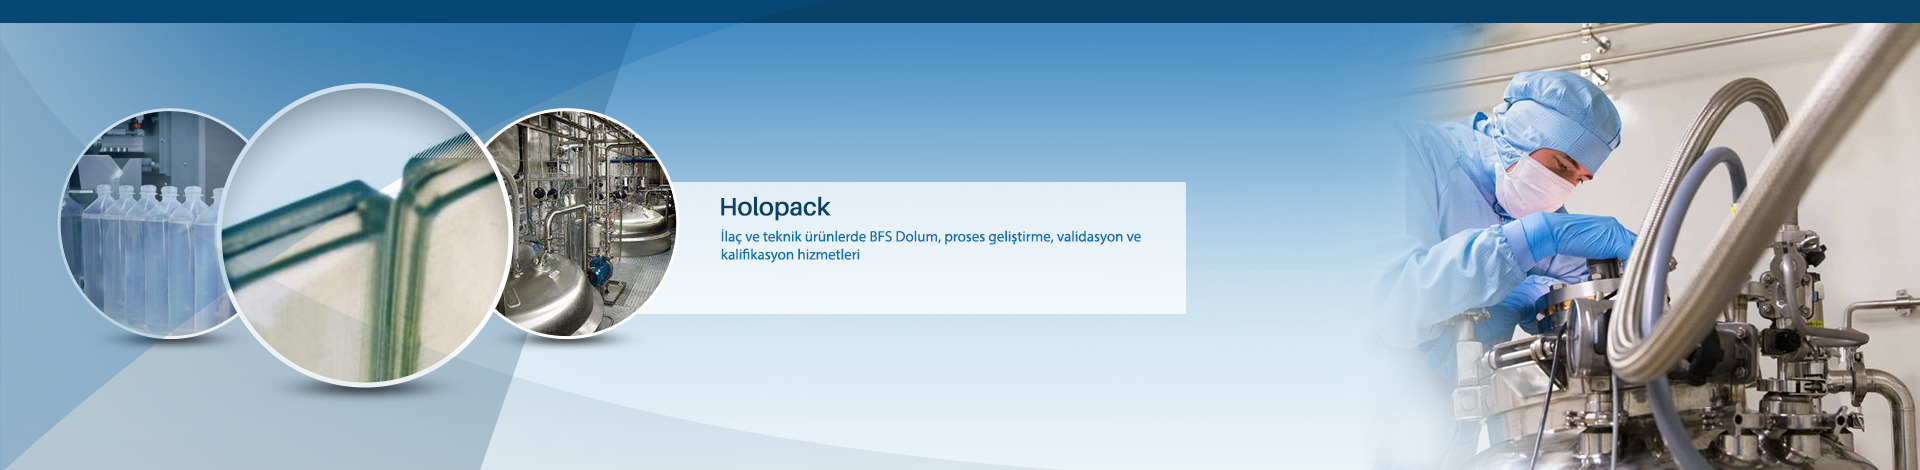 Holopack